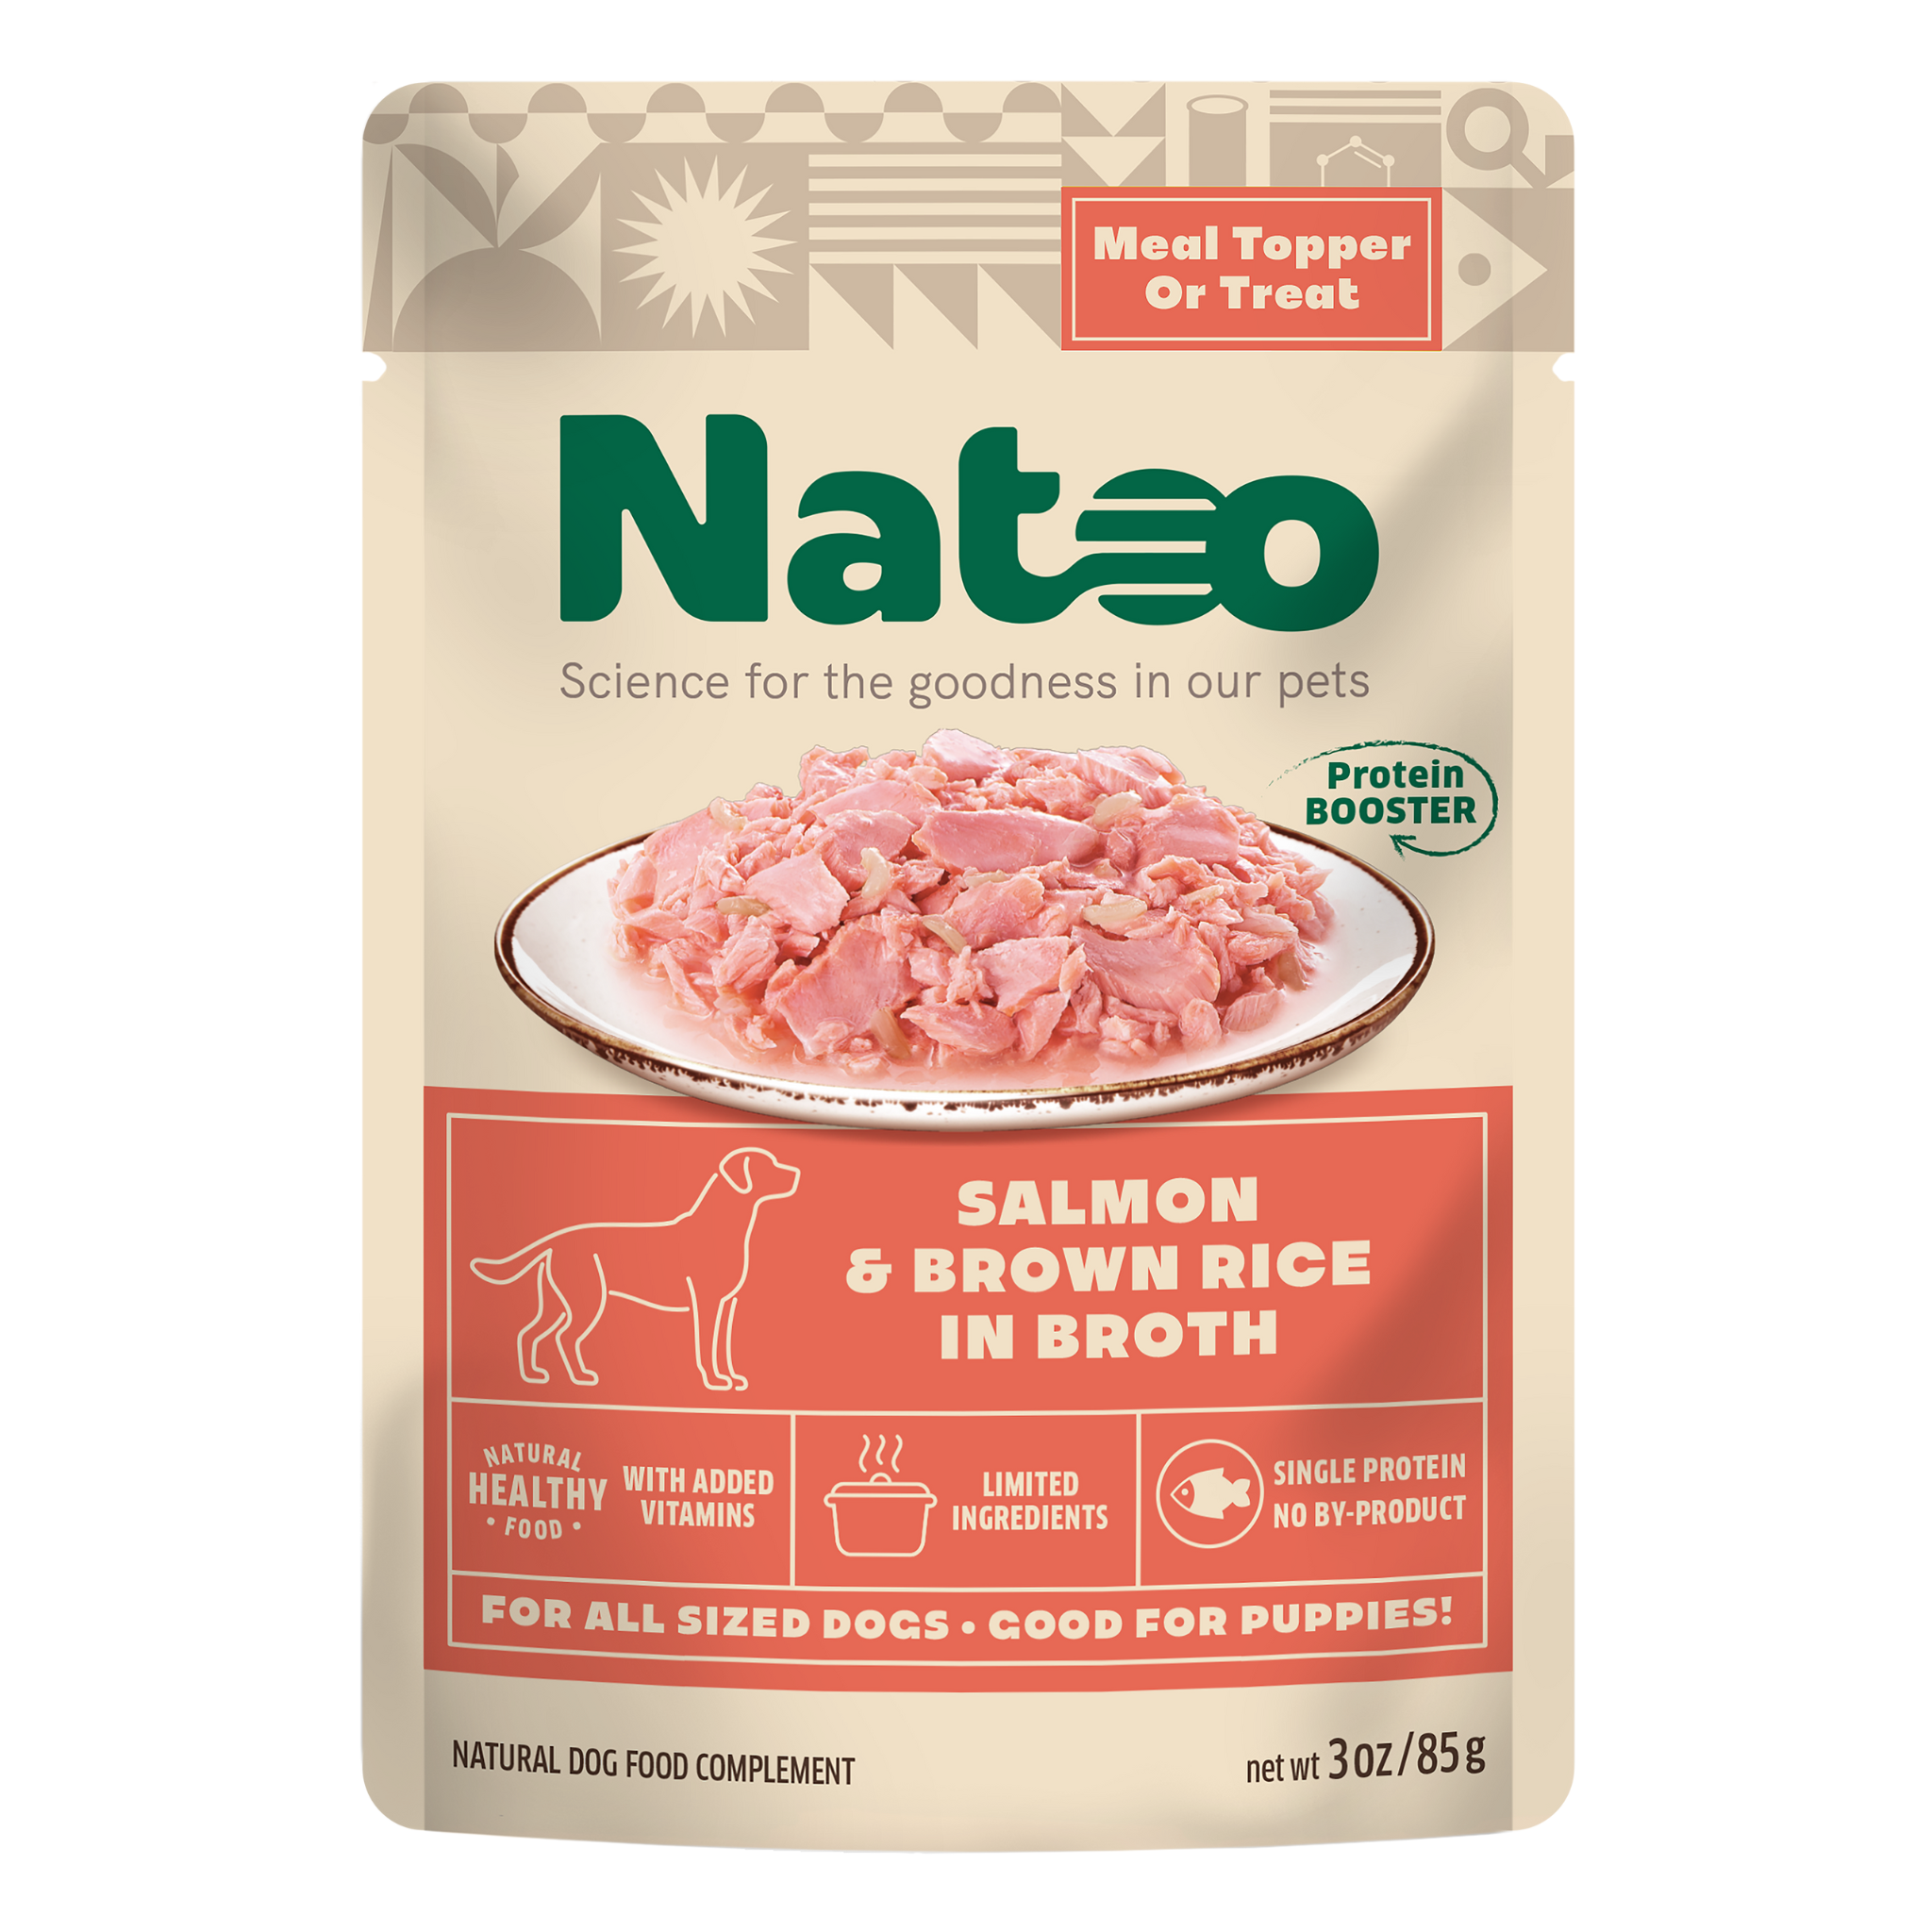 Natoo Salmon & Brown Rice in Broth (20 pcs)